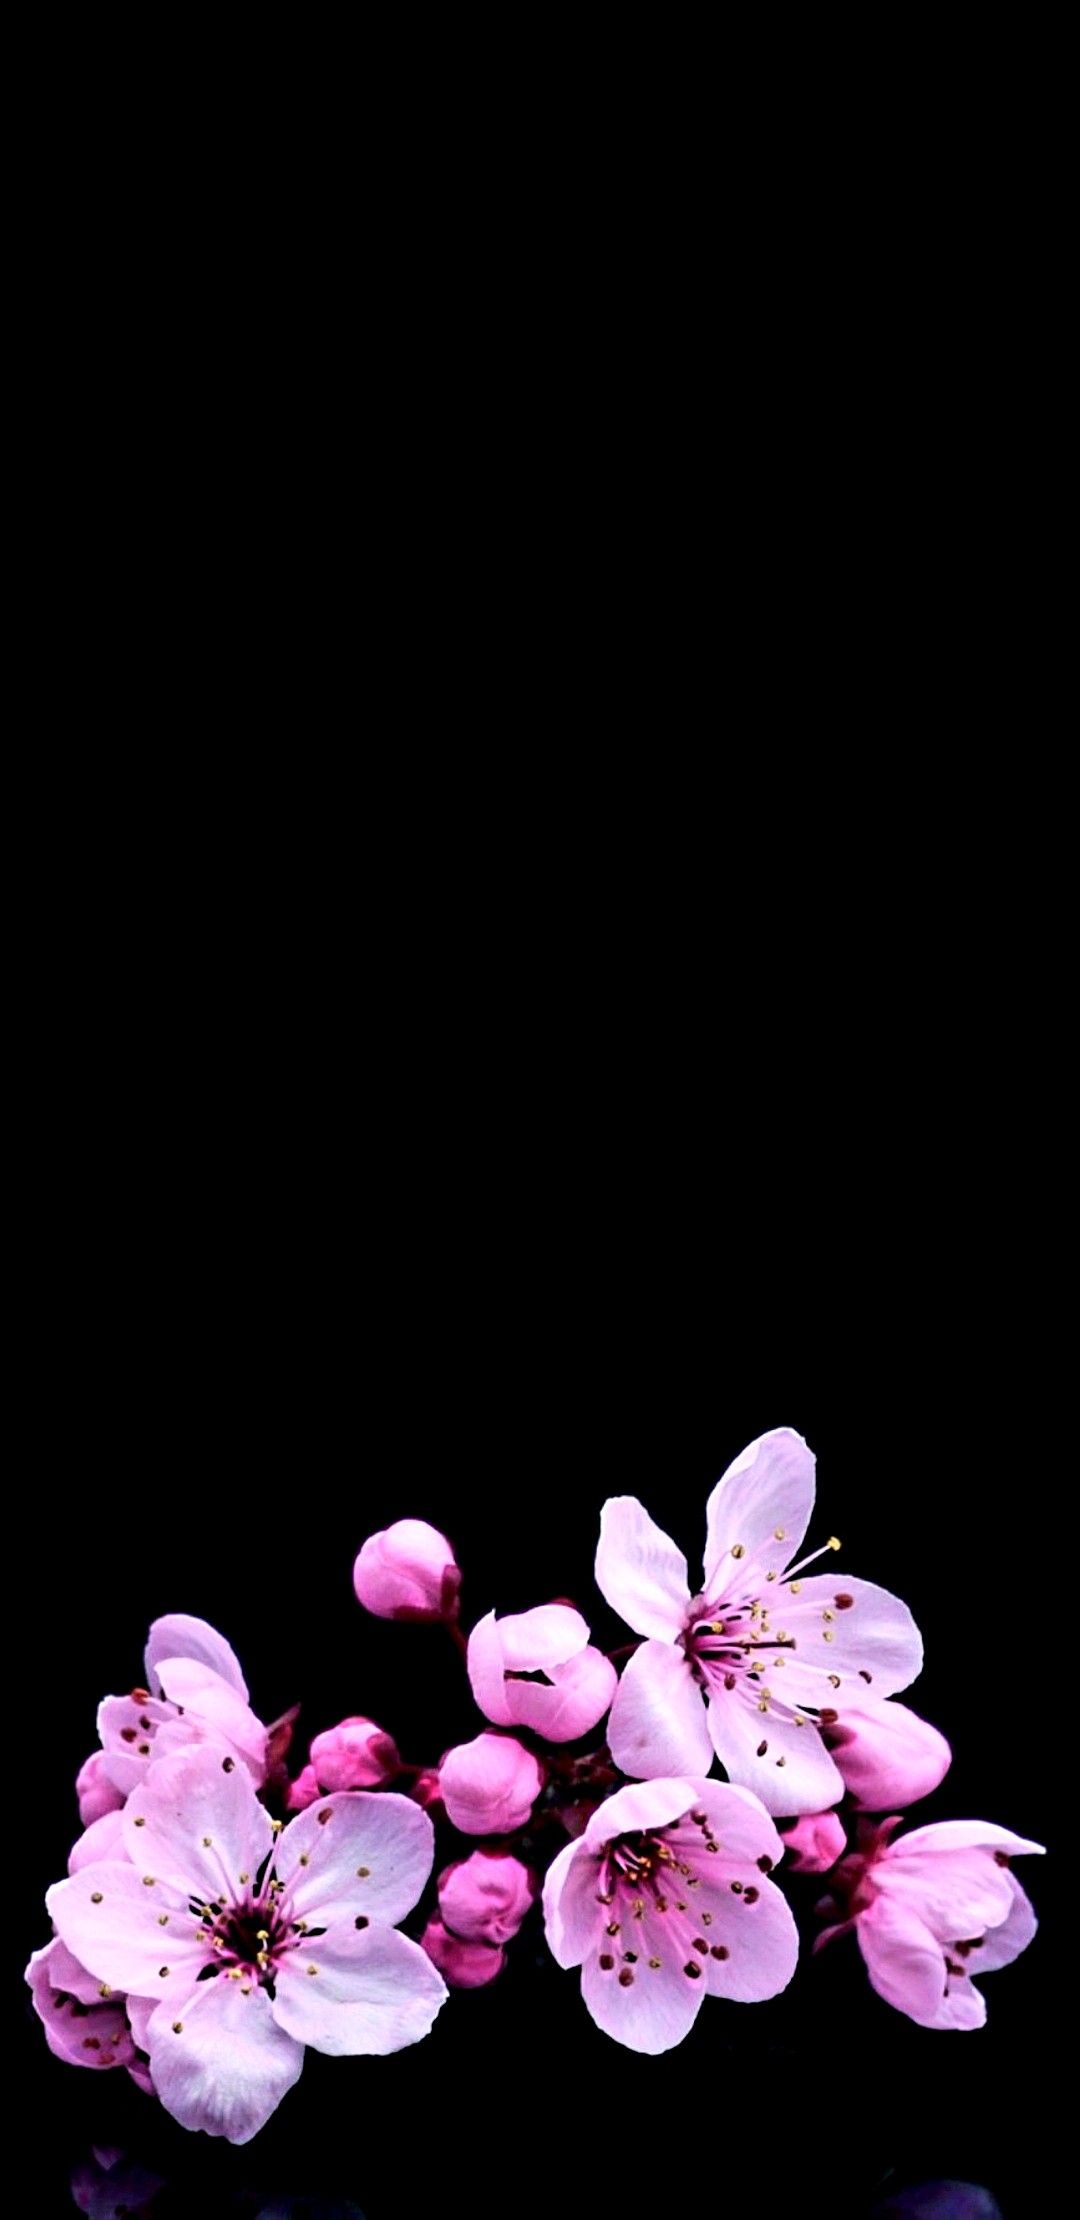 Japanese / Cherry Blossom Wallpaper. Cherry blossom wallpaper iphone, Wallpaper iphone quotes background, iPhone background art